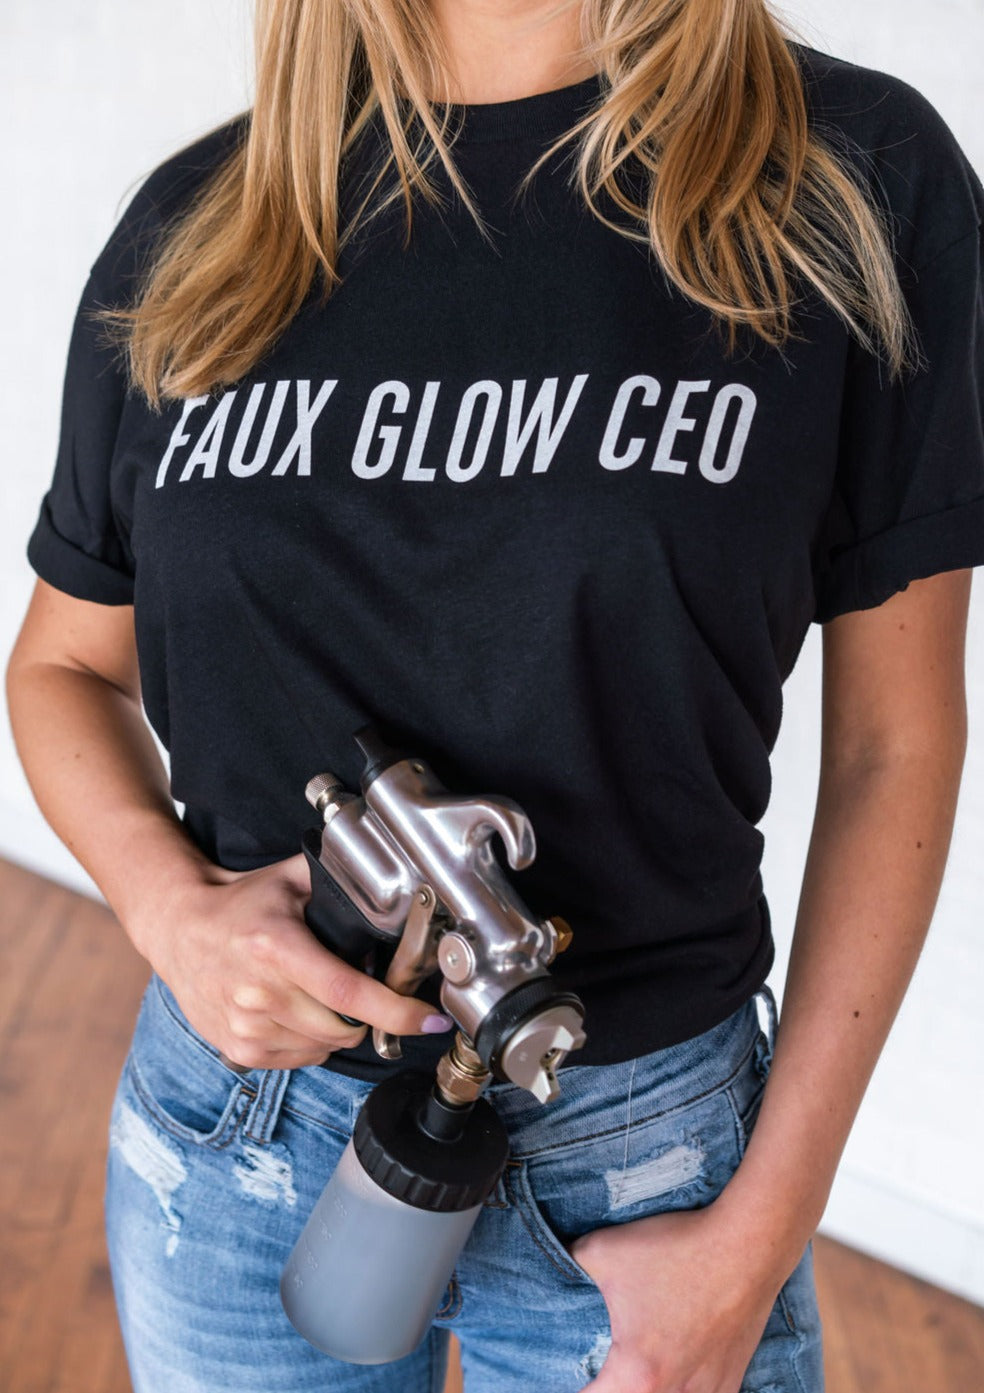 Faux Glow CEO Tee